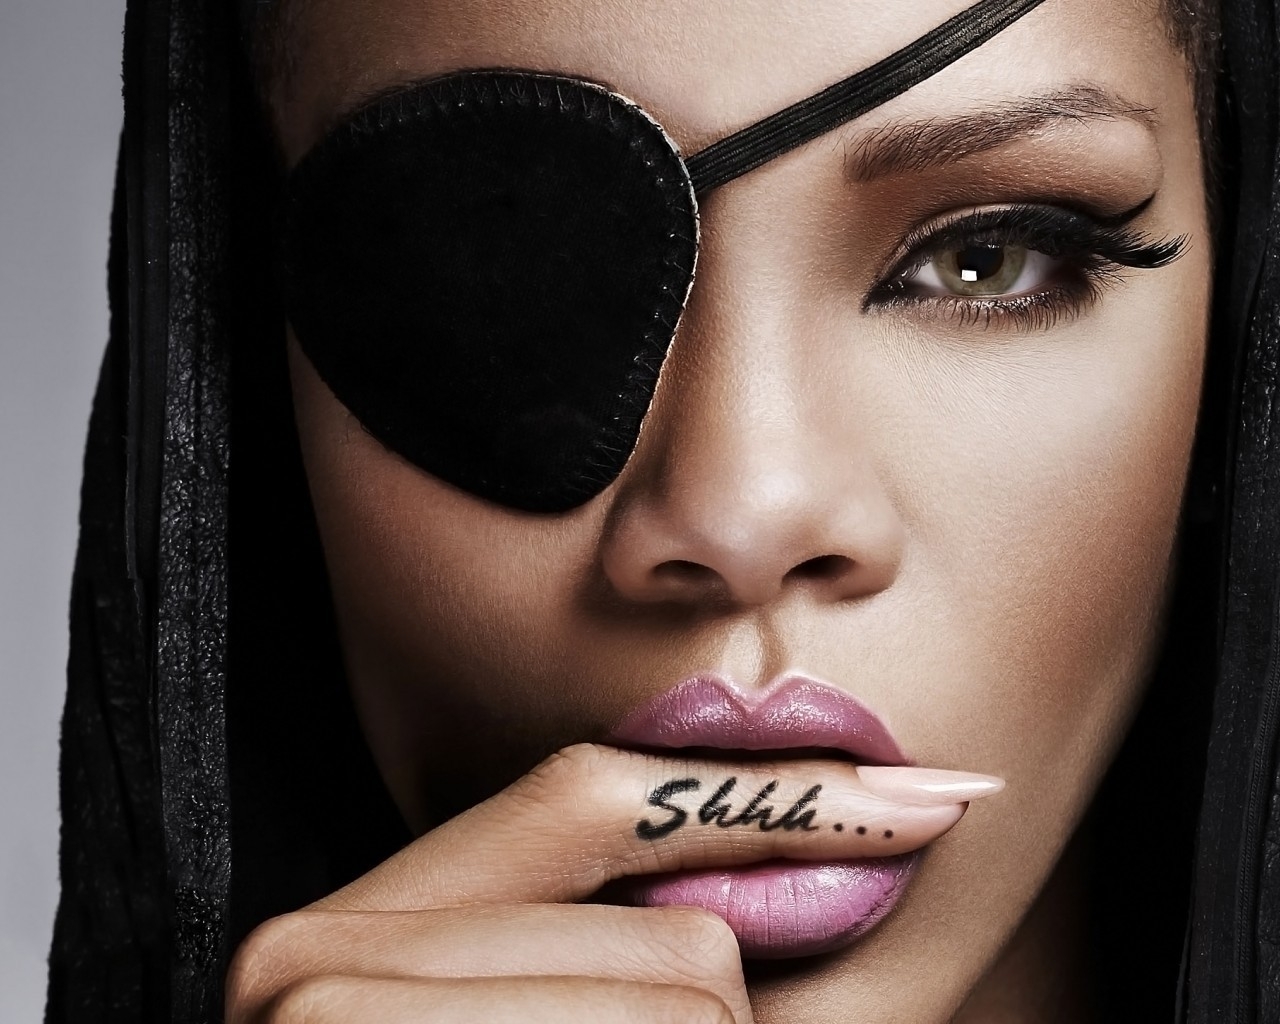 Rihanna Shhh Tattoo for 1280 x 1024 resolution